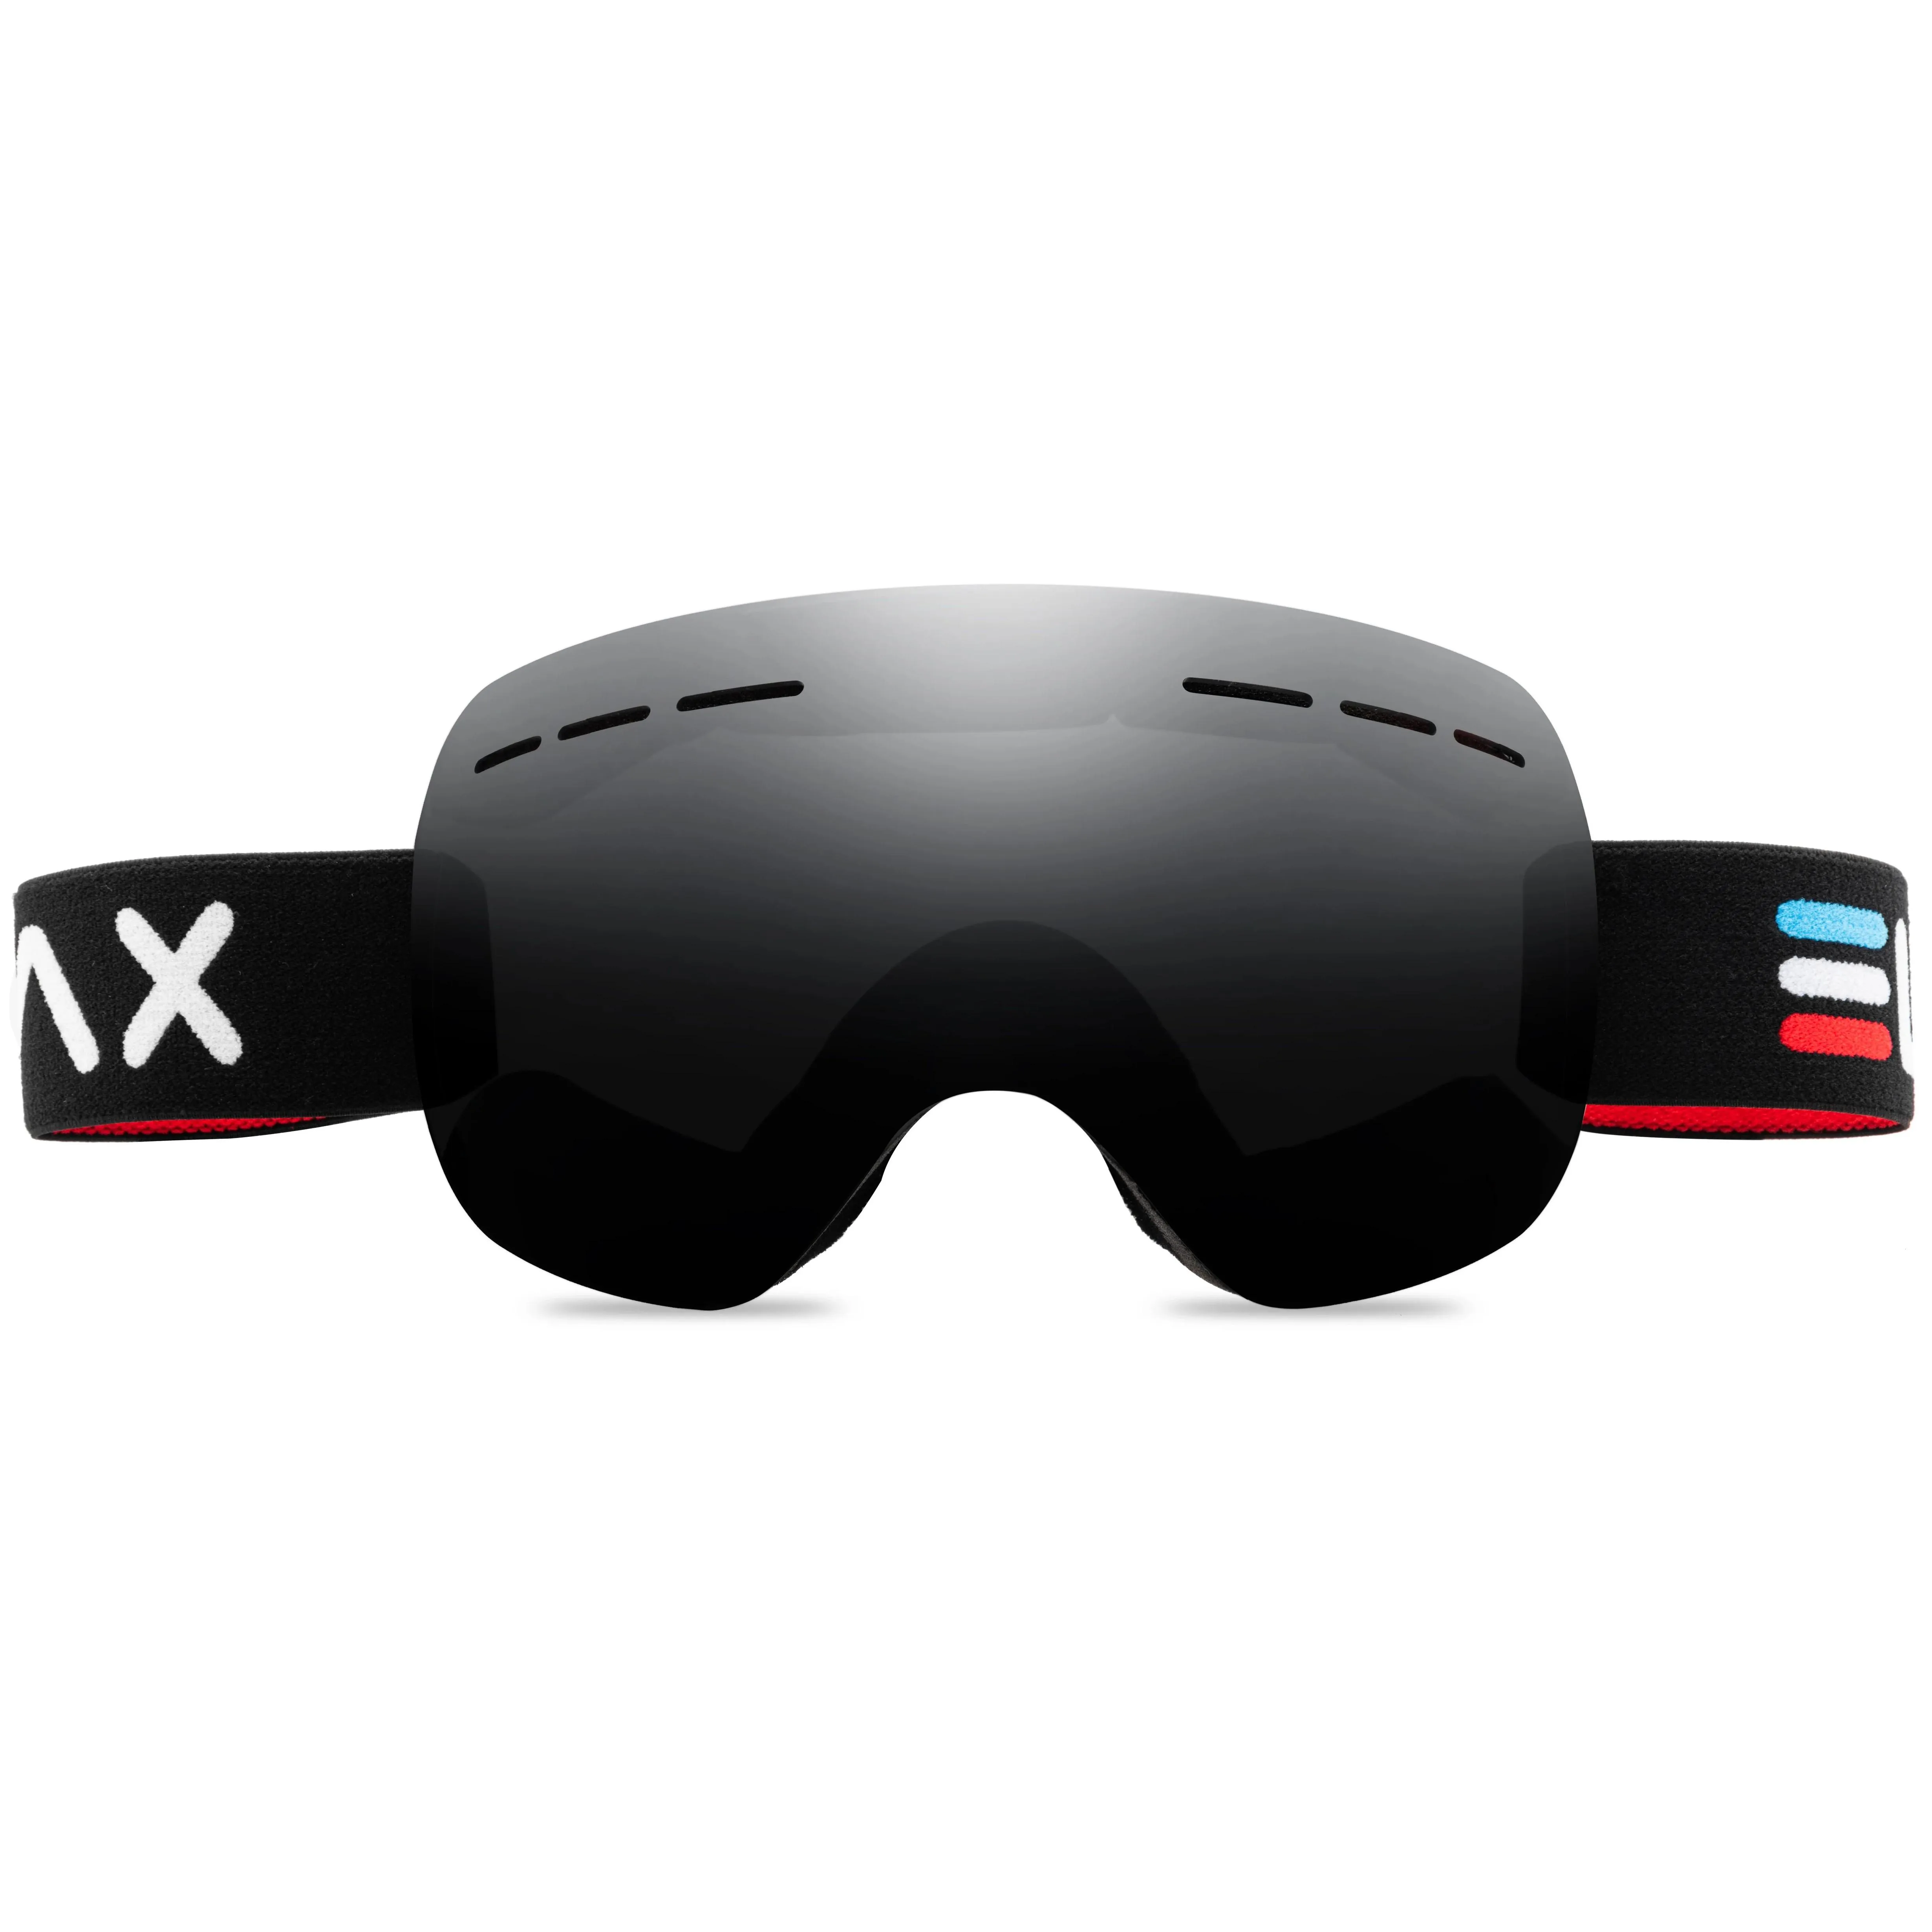 Goggles ELAX BRAND NEW Outdoor Sport Ski Goggles Ski Mask Skiing Glasses Snow Snowboard Googles Men Women Snowmobile Eyewear